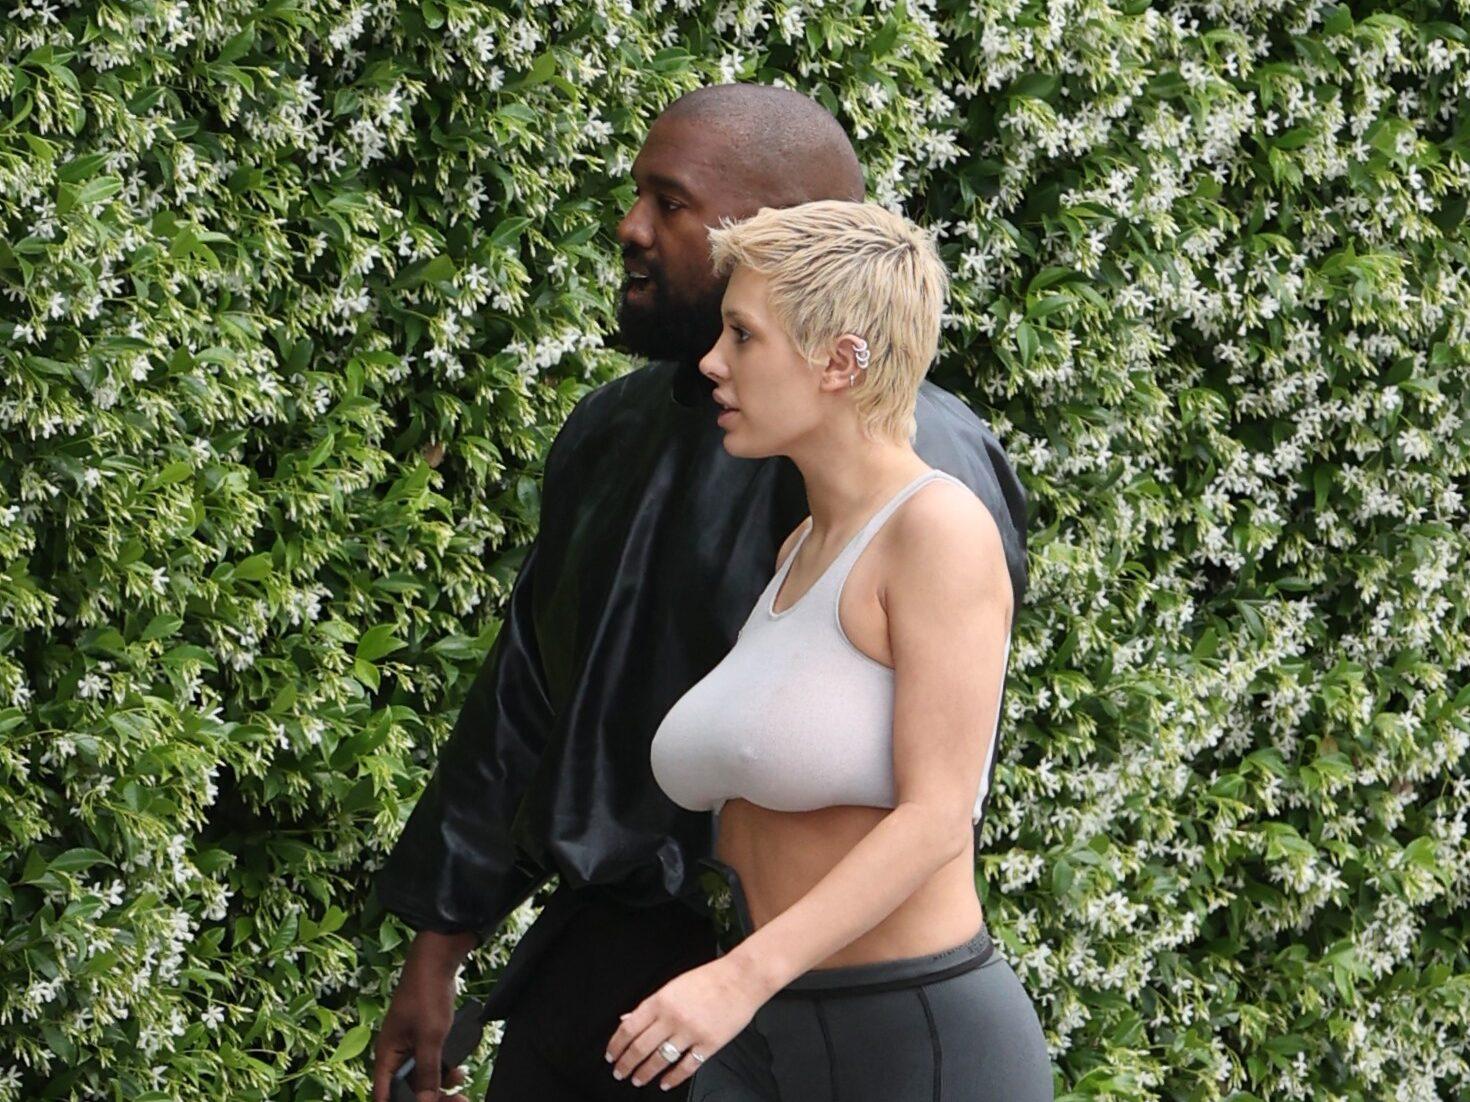 Kanye West with wife Bianca Censori